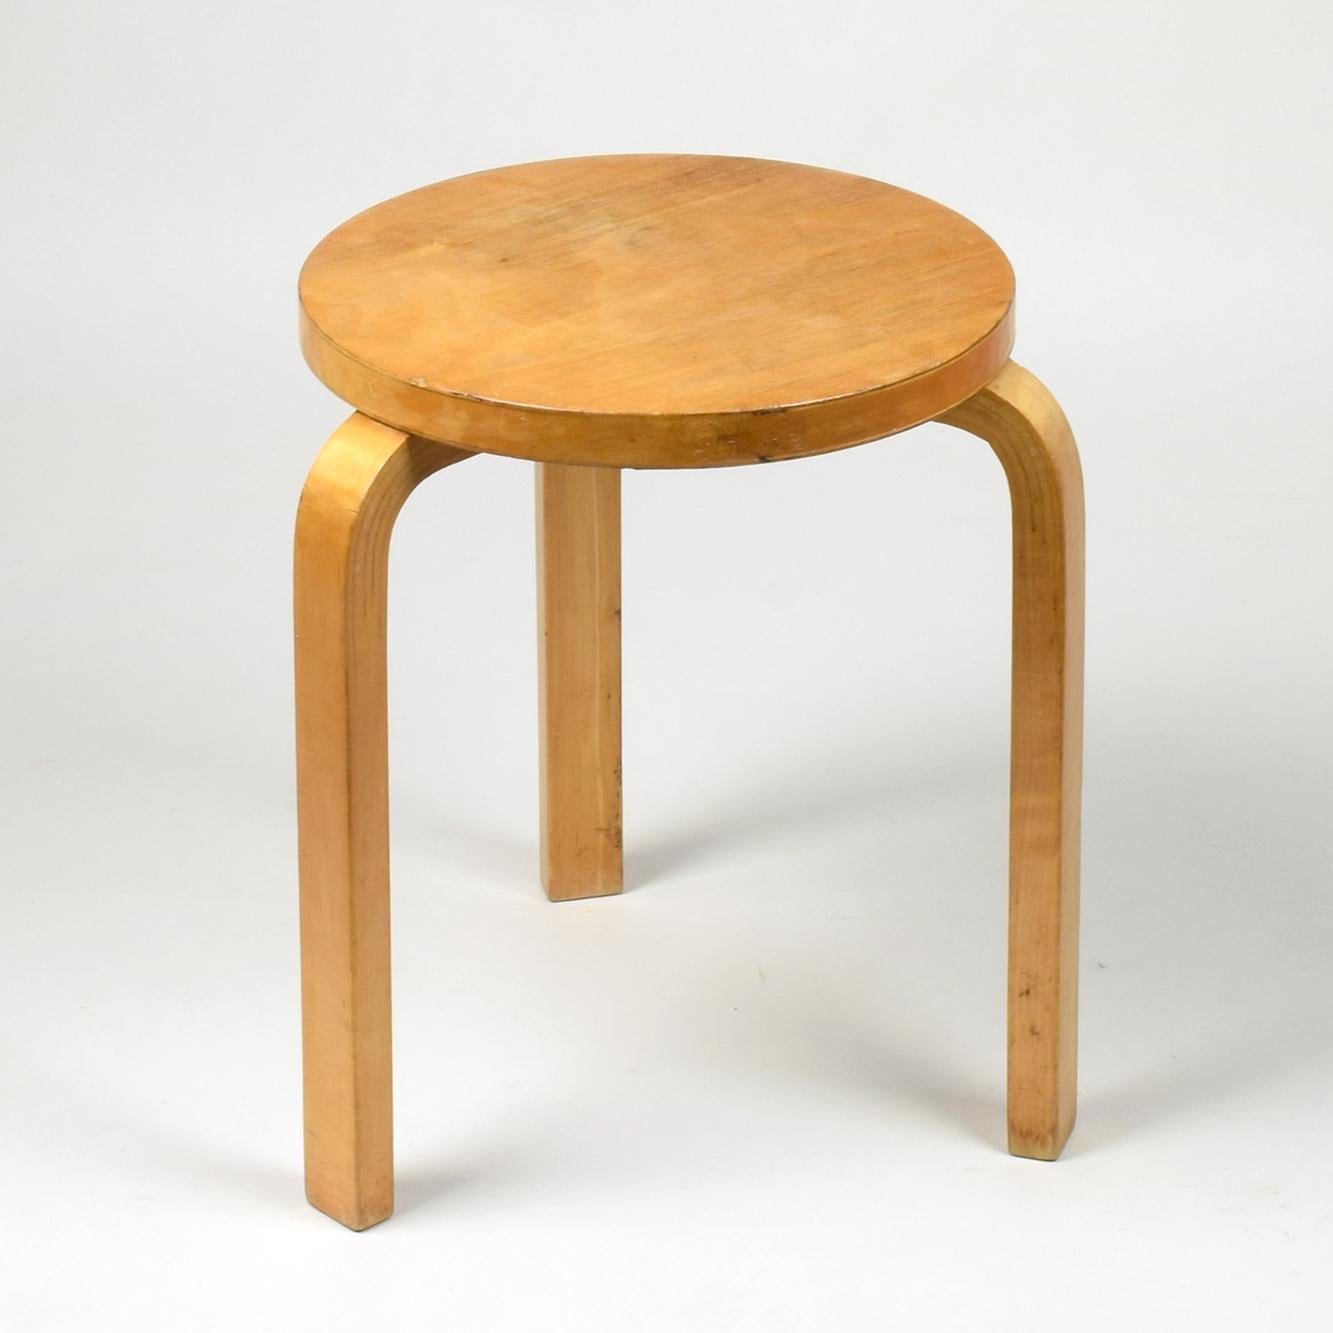 Alvar Aalto.
Manufactured by Oy Huonekalu-Ja Rakennustyo¨tedas, Finland.
Model 60 stool, designed 1933.

Birch and birch plywood.
Original early version in good un-restored condition.

Dims.: diameter 35cm, height 43.5cm; weight: 2.4kg